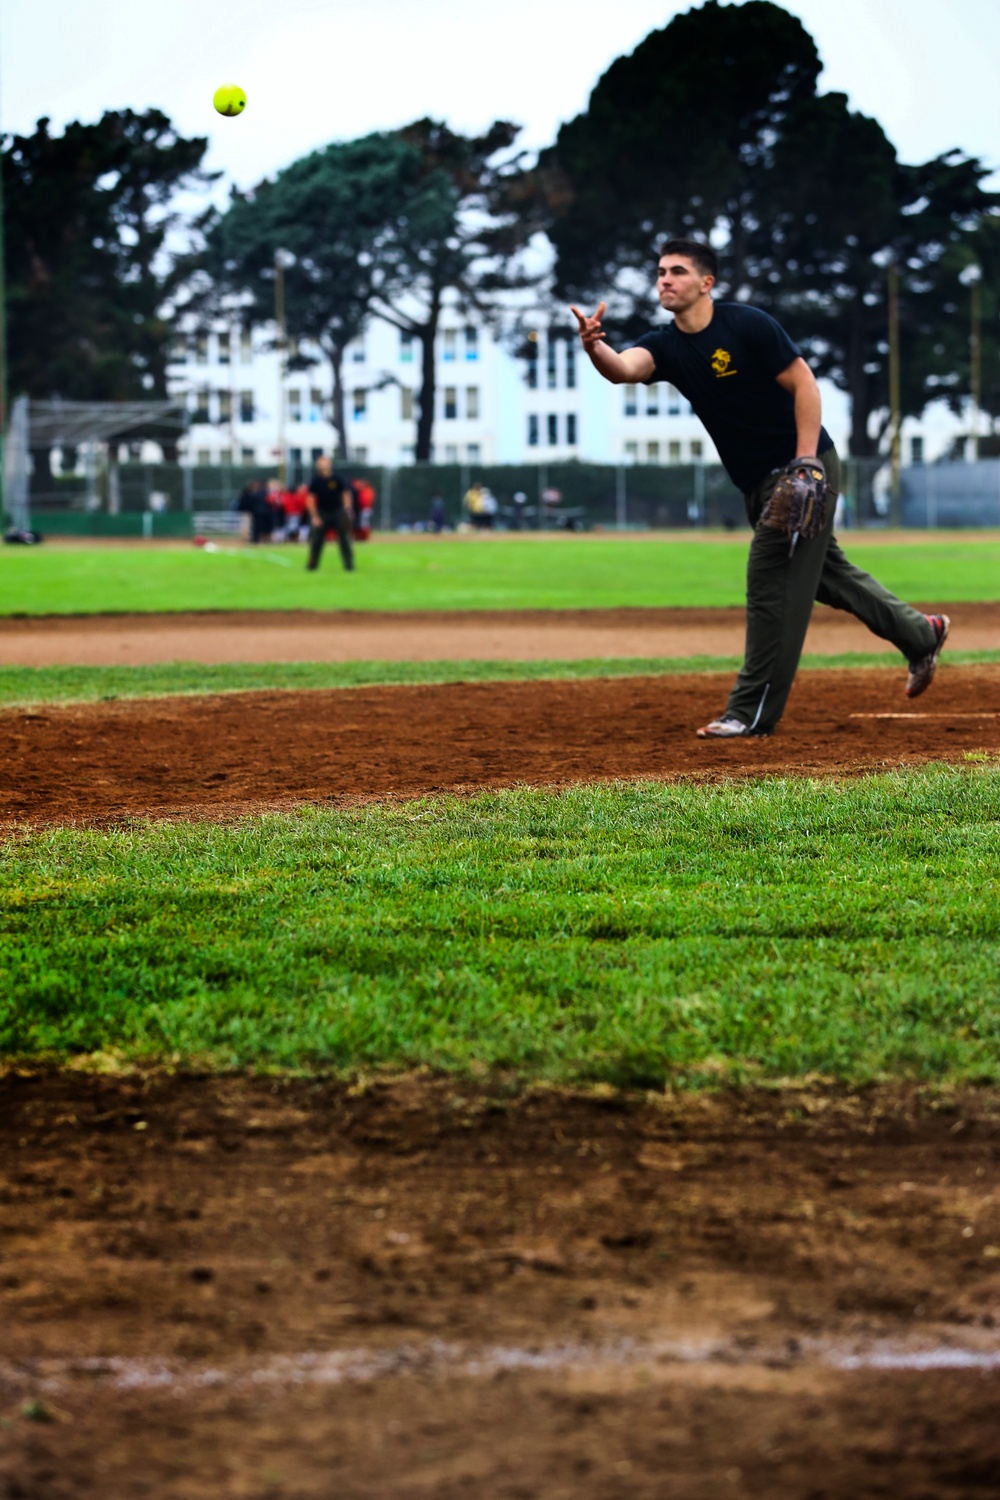 Marines play softball against San Francisco Police Department